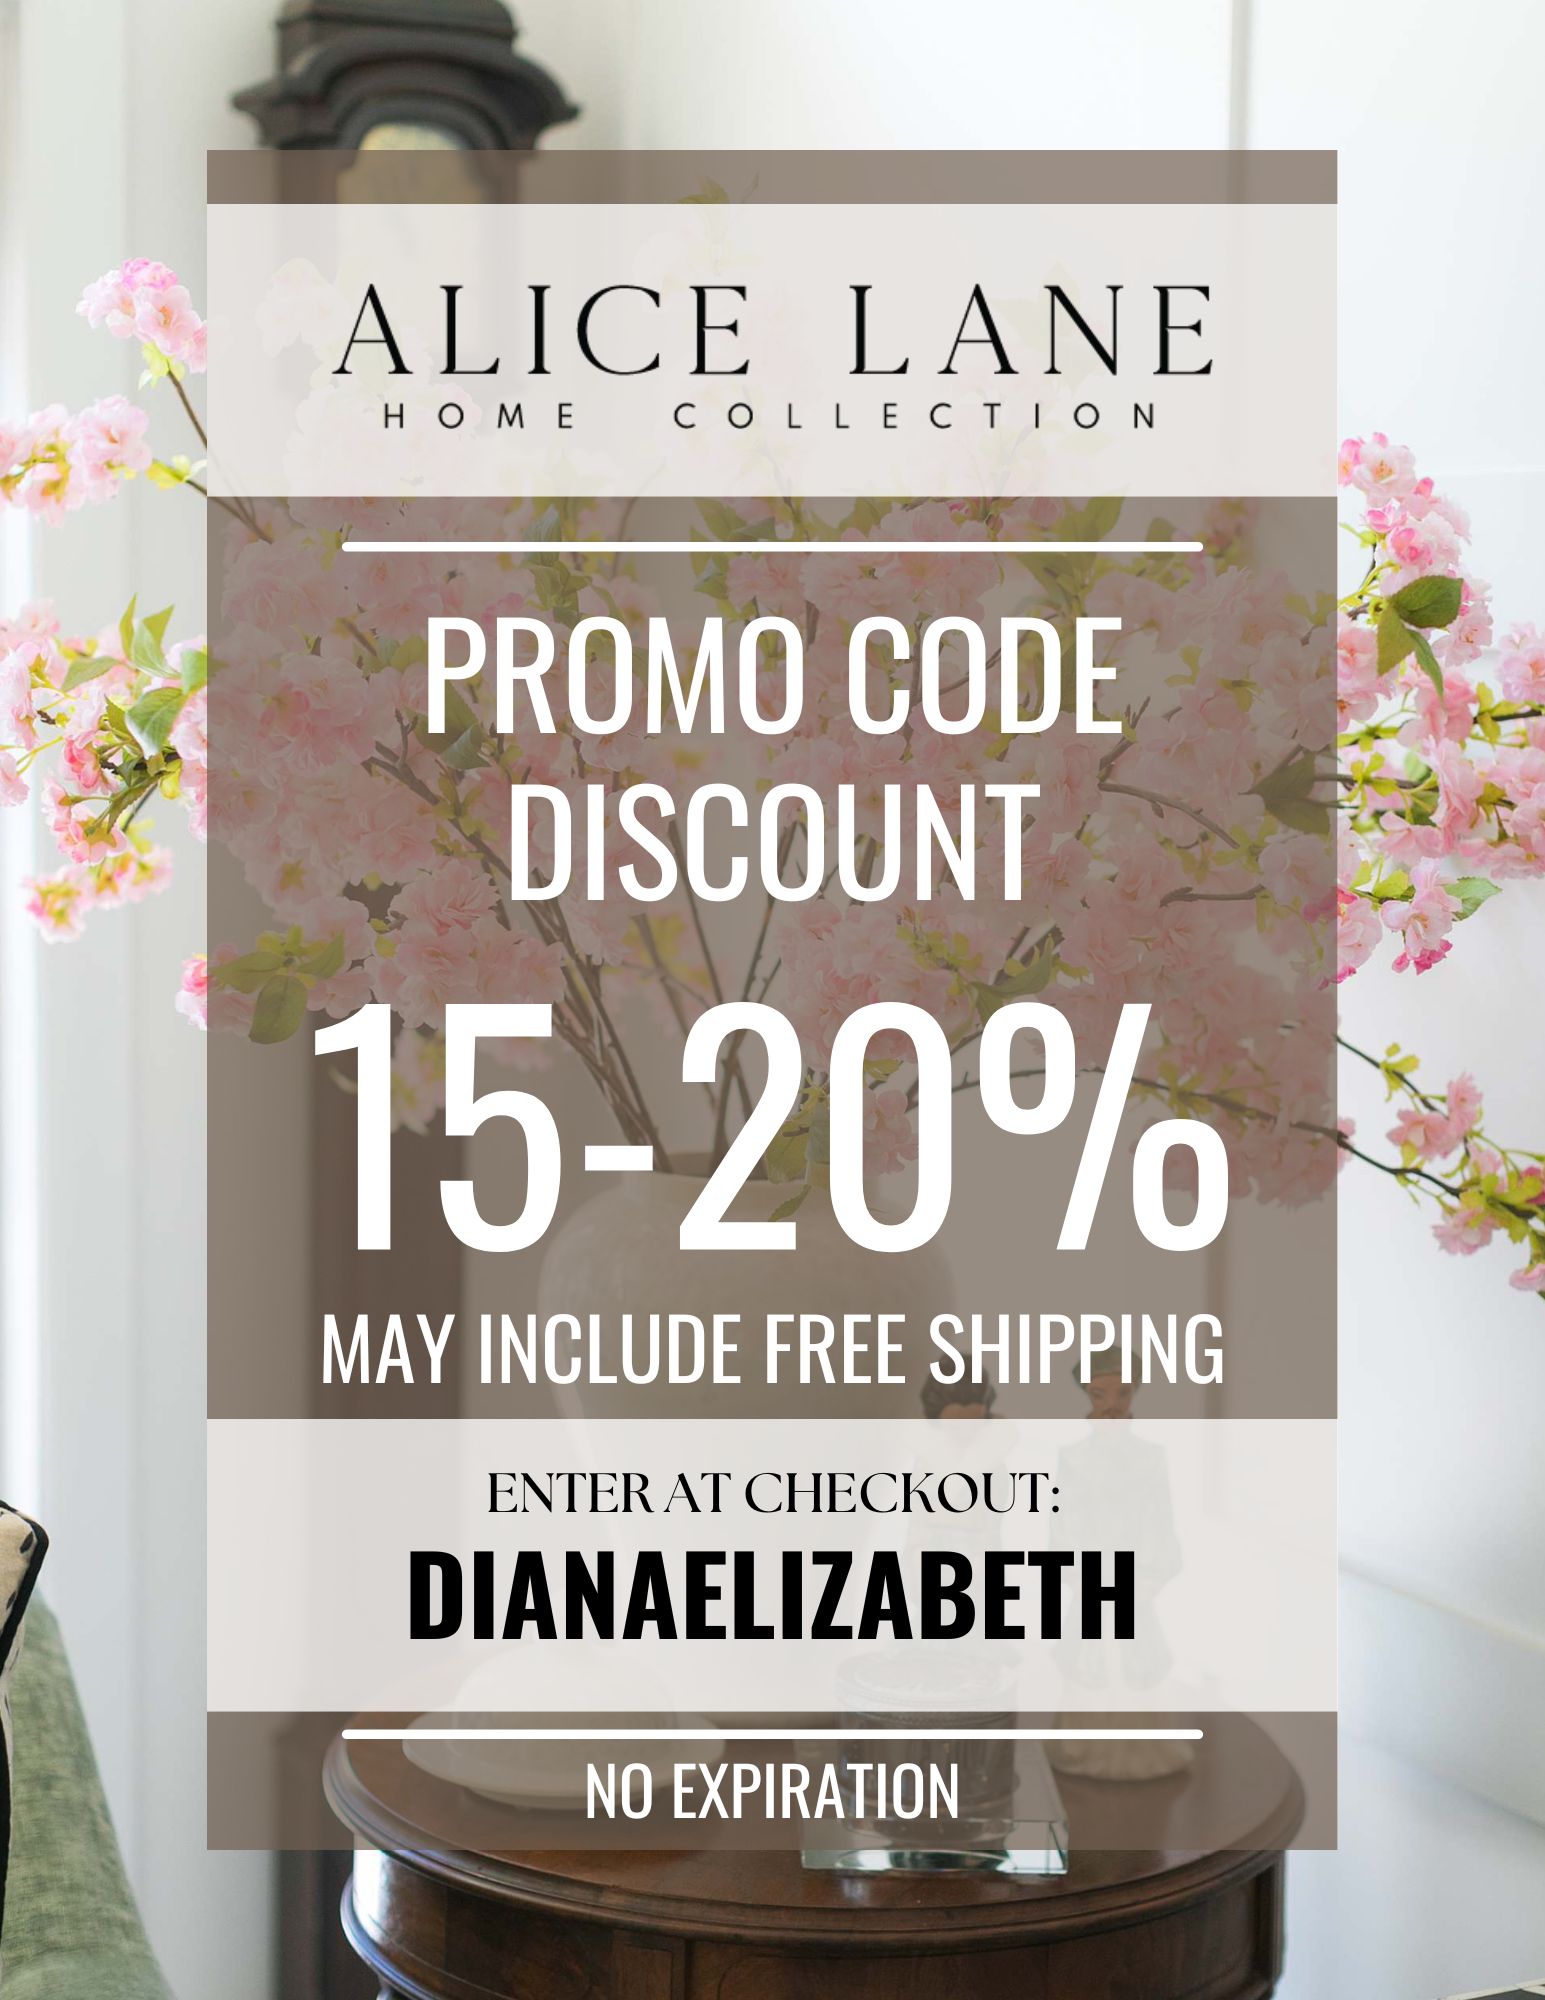 Alice lane home promo code coupon code discount free shipping